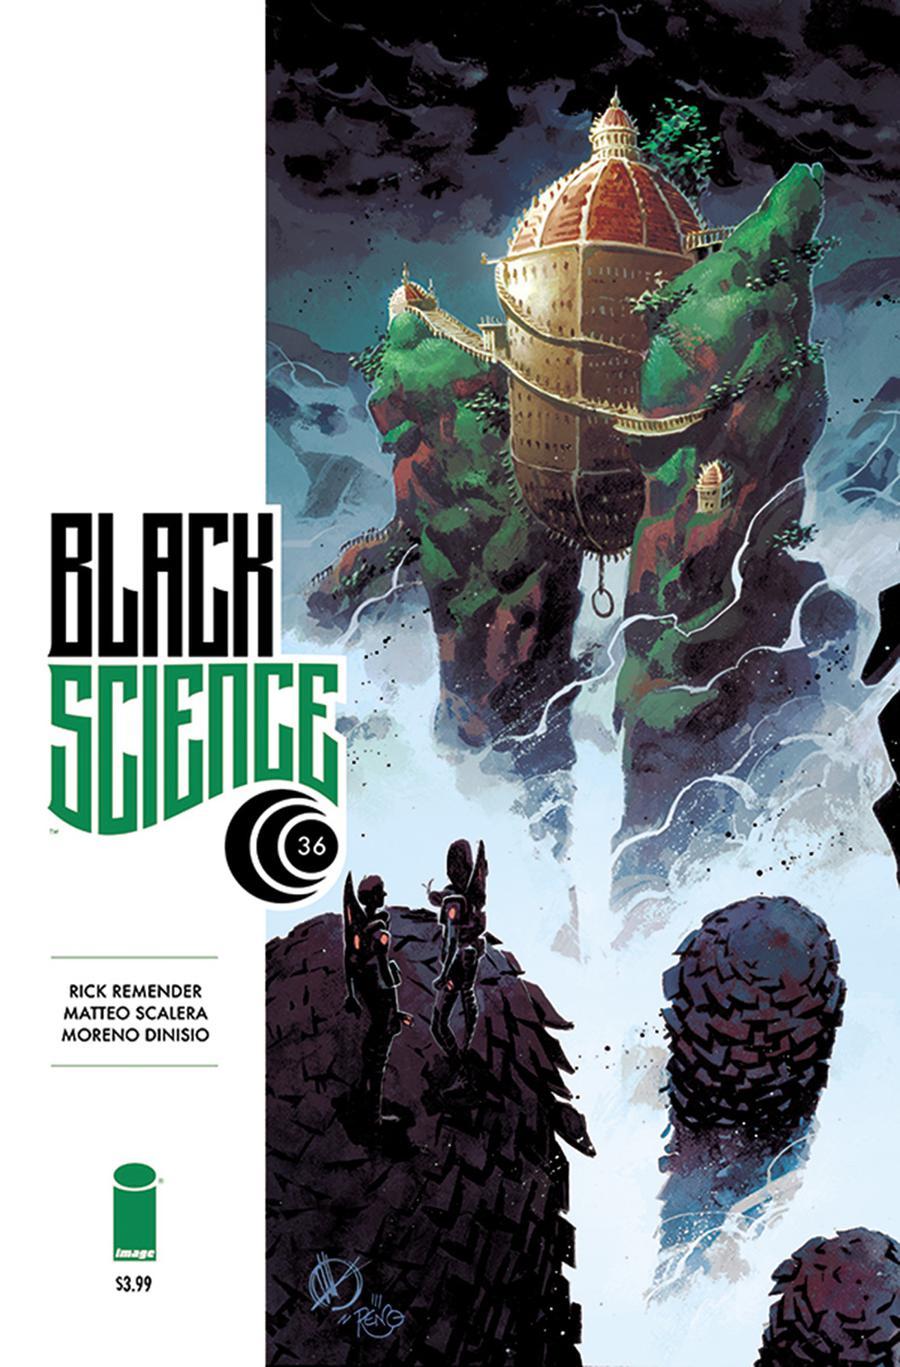 Black Science Vol. 1 #36